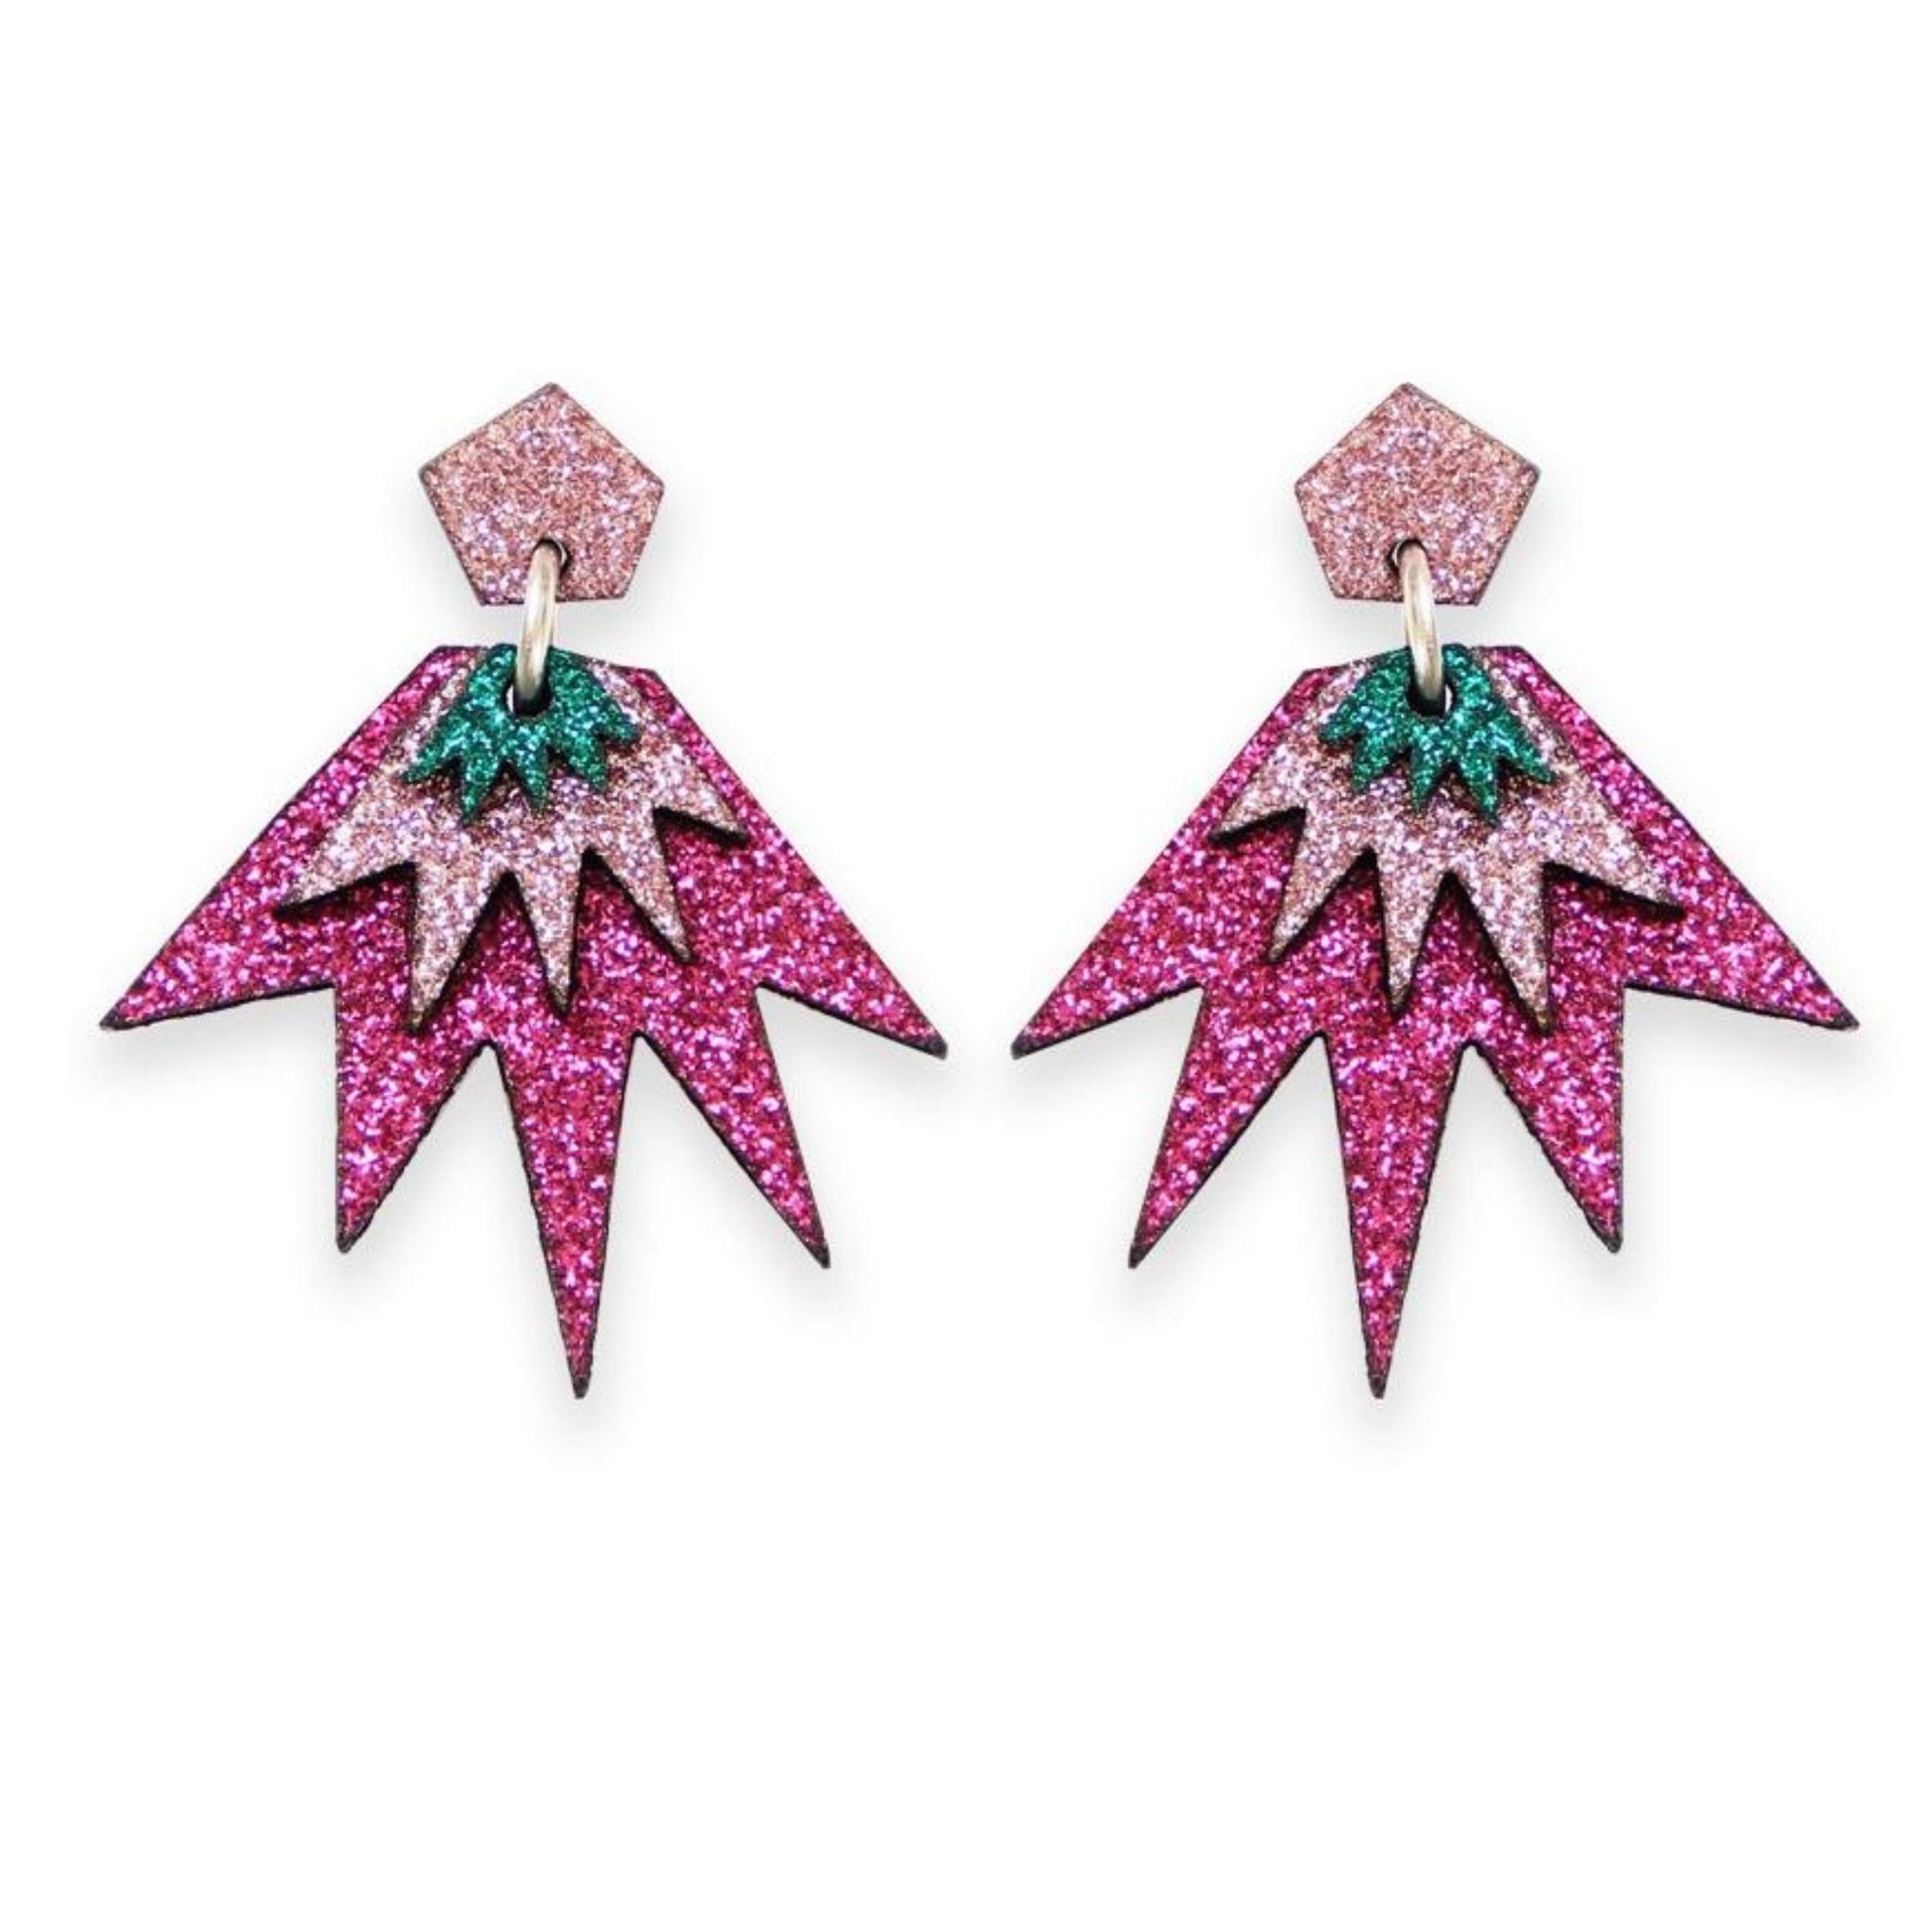 Bang Bang Drop Stud Earrings: Magenta, Baby Pink & Emerald - The Little Jewellery Company